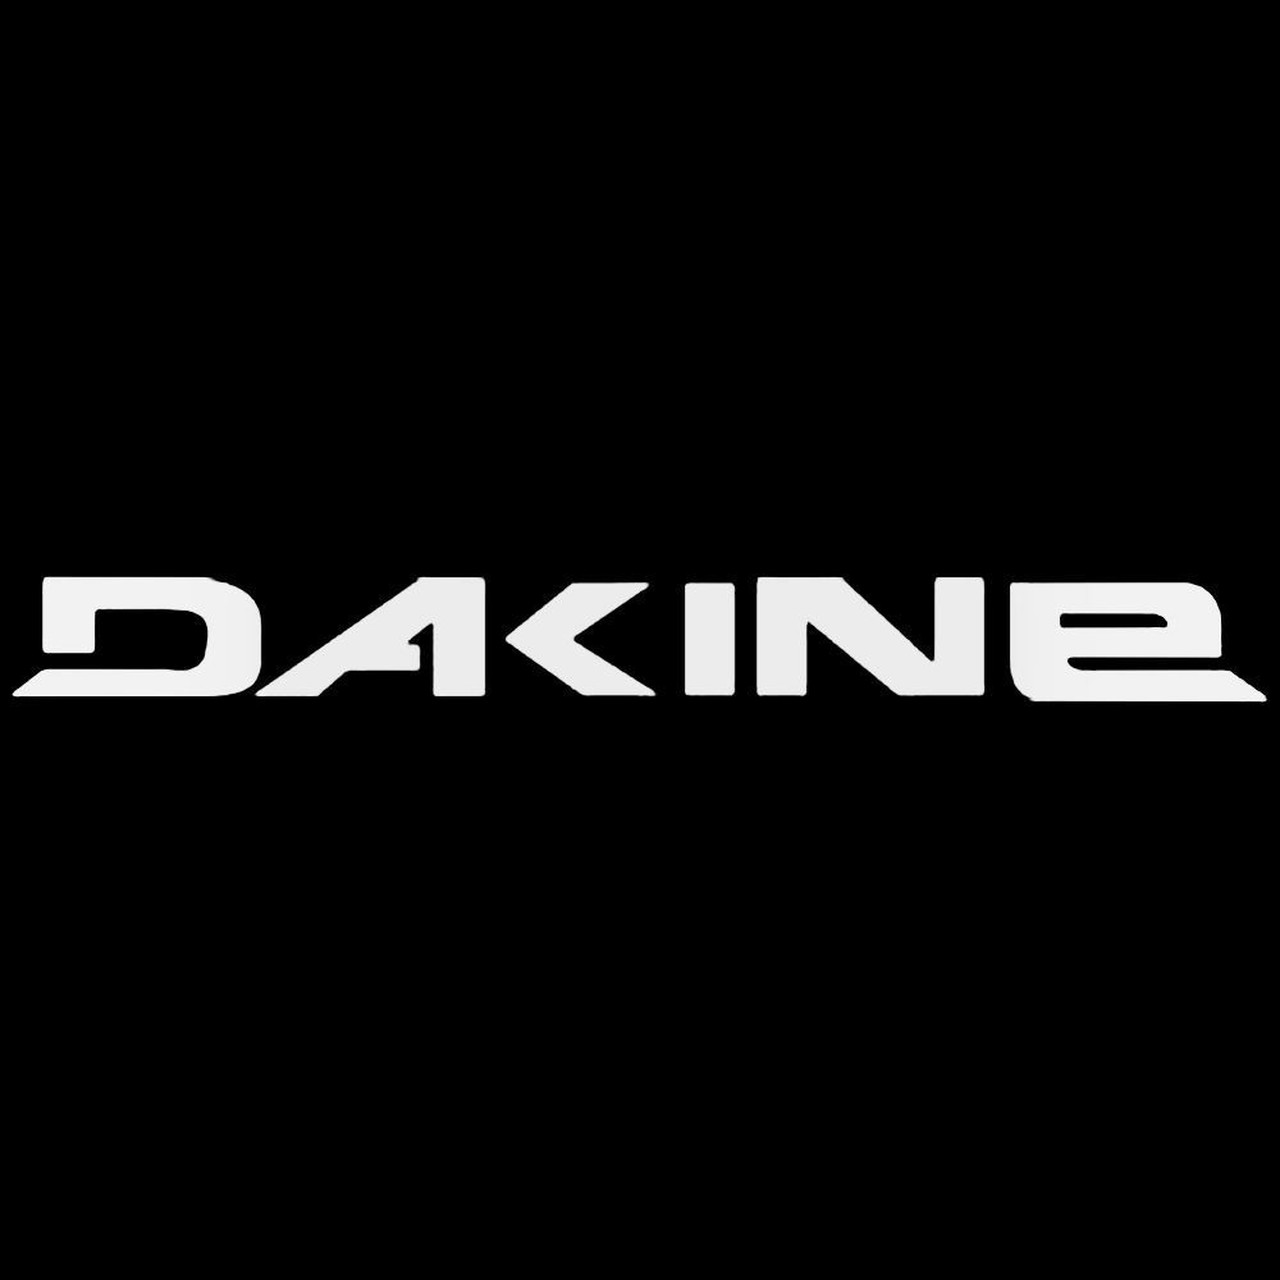 DAKINE Coupons & Promo Codes